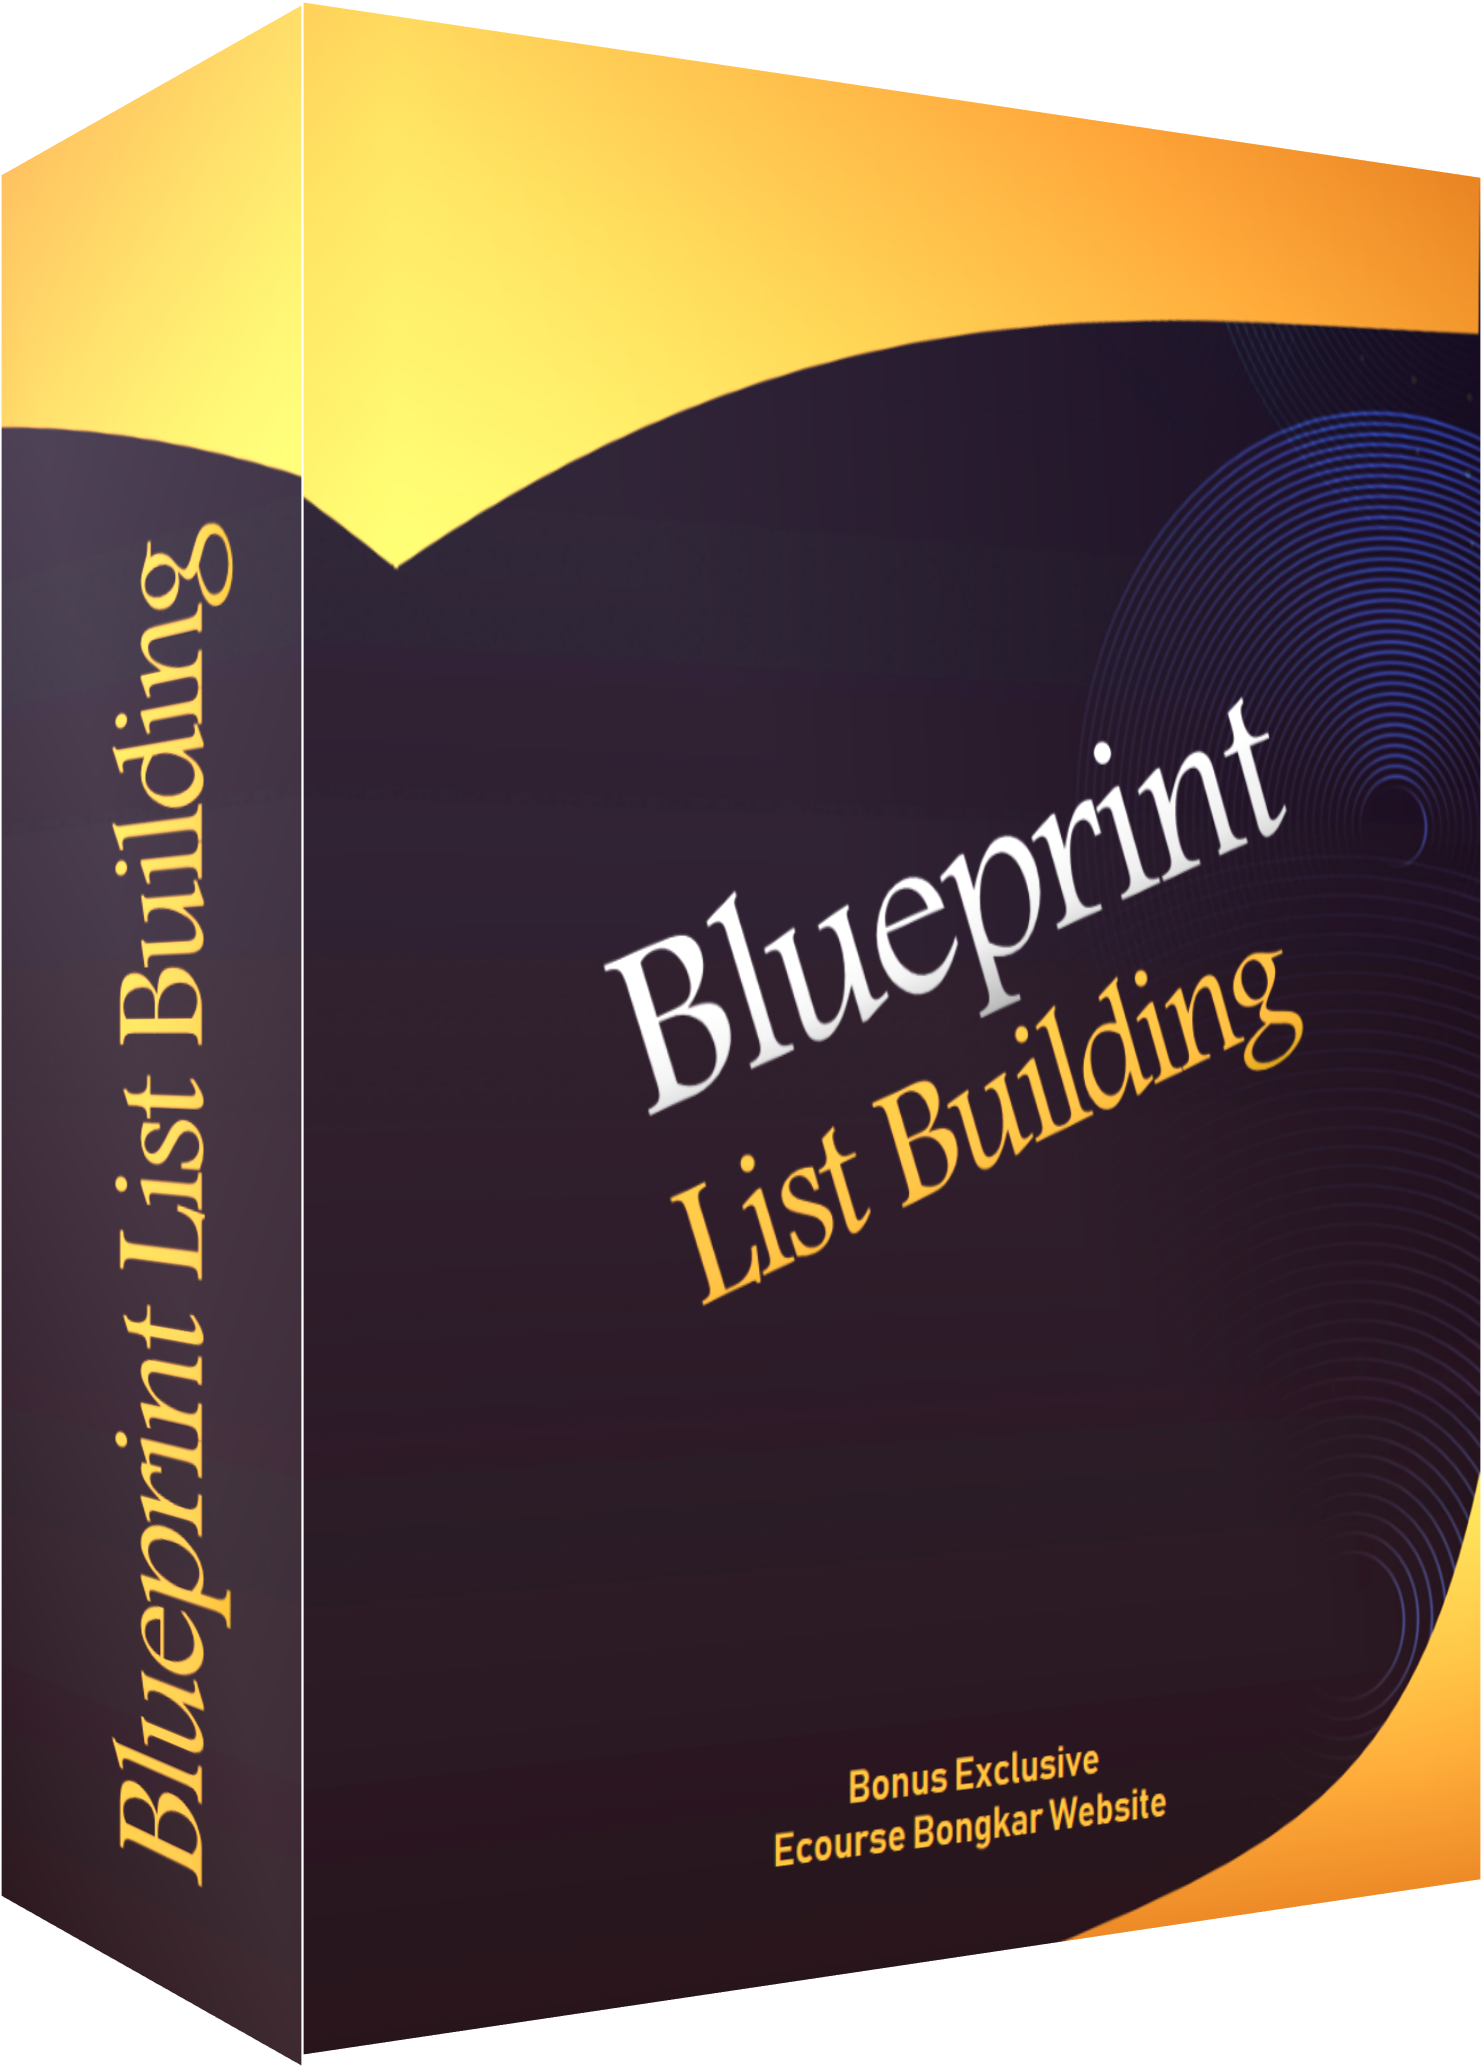 ecover-blueprint-list-building.png